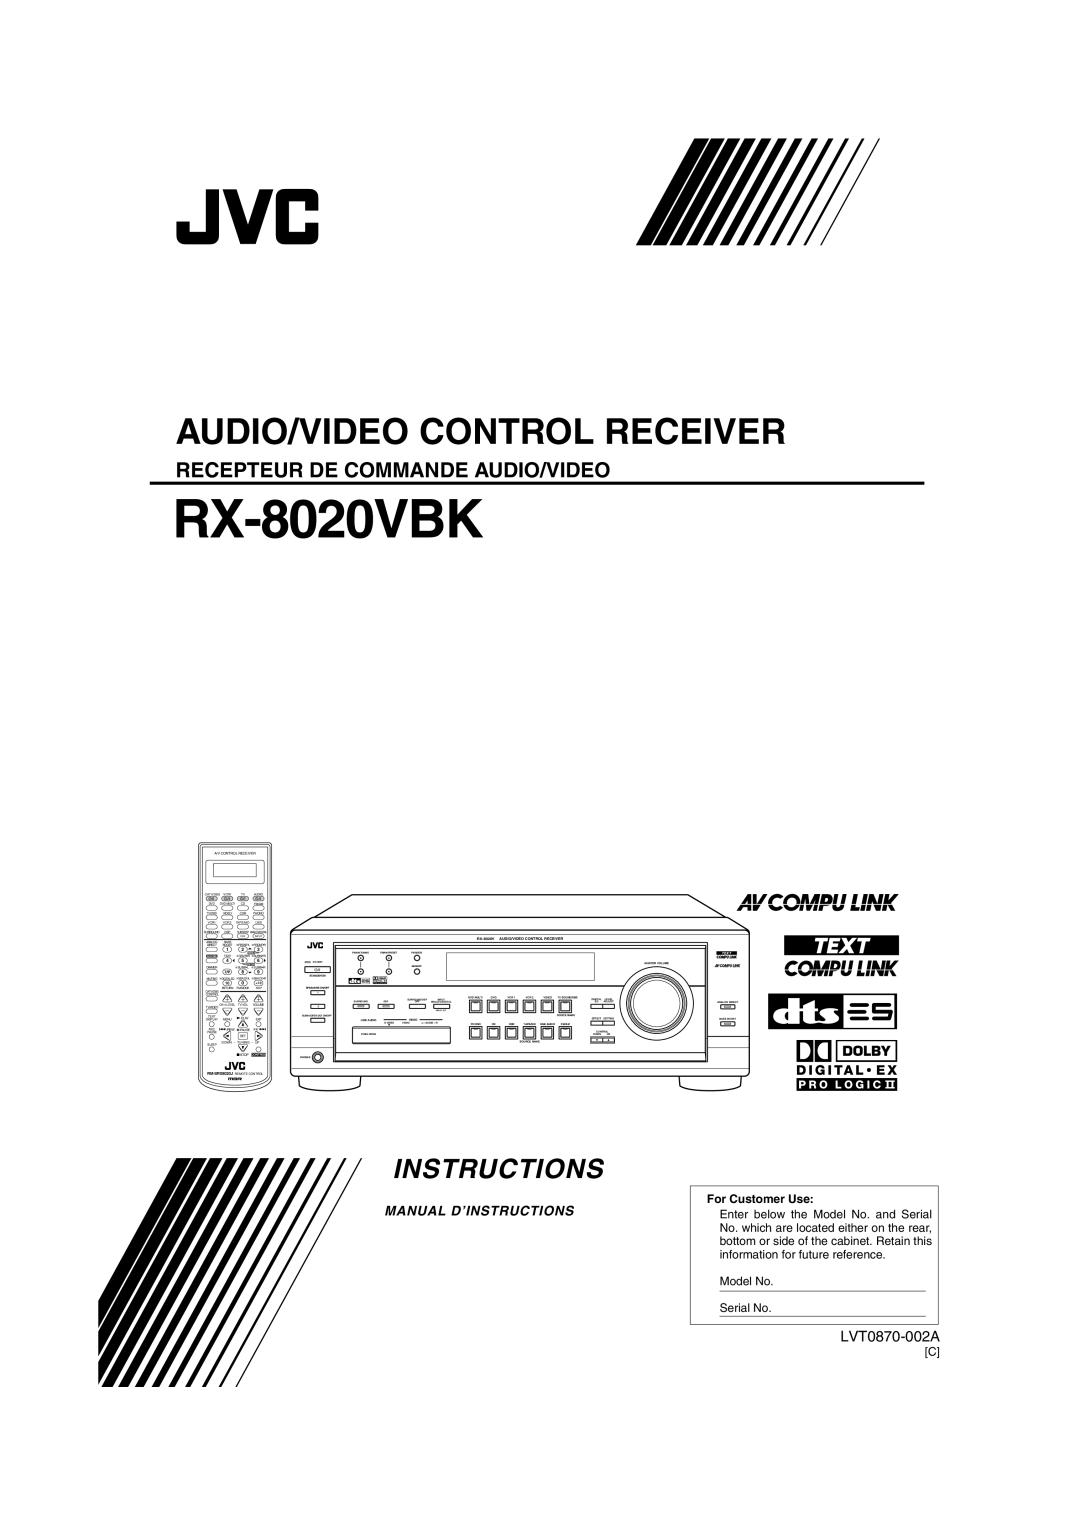 JVC RX-8020VBK Audio/Video Control Receiver, Instructions, Recepteur De Commande Audio/Video, LVT0870-002A, Stop Control 